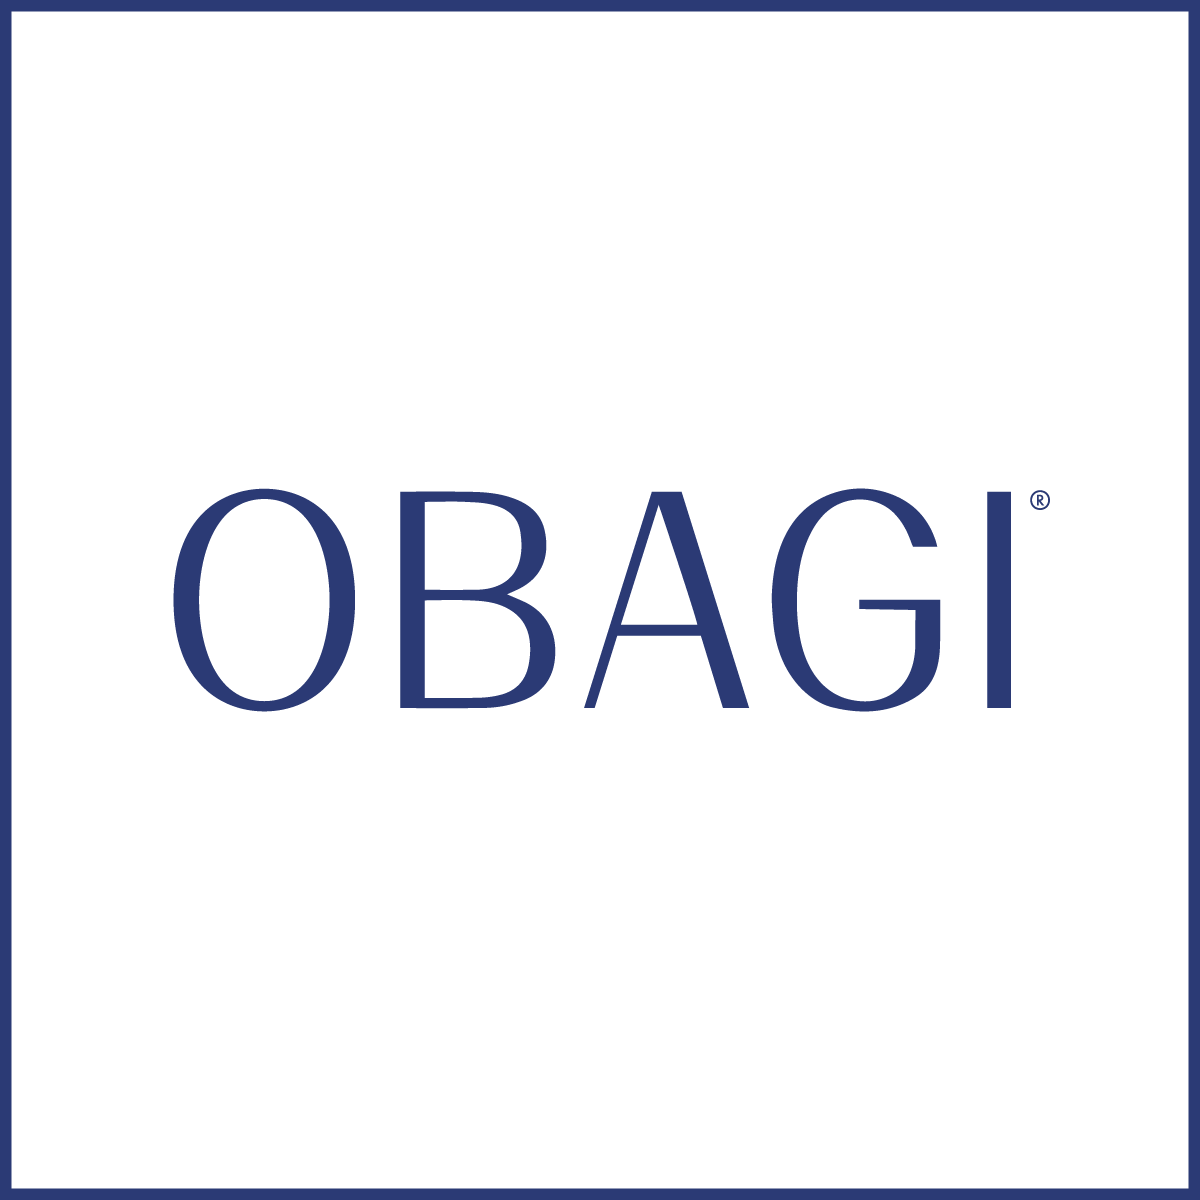 Obagi logo